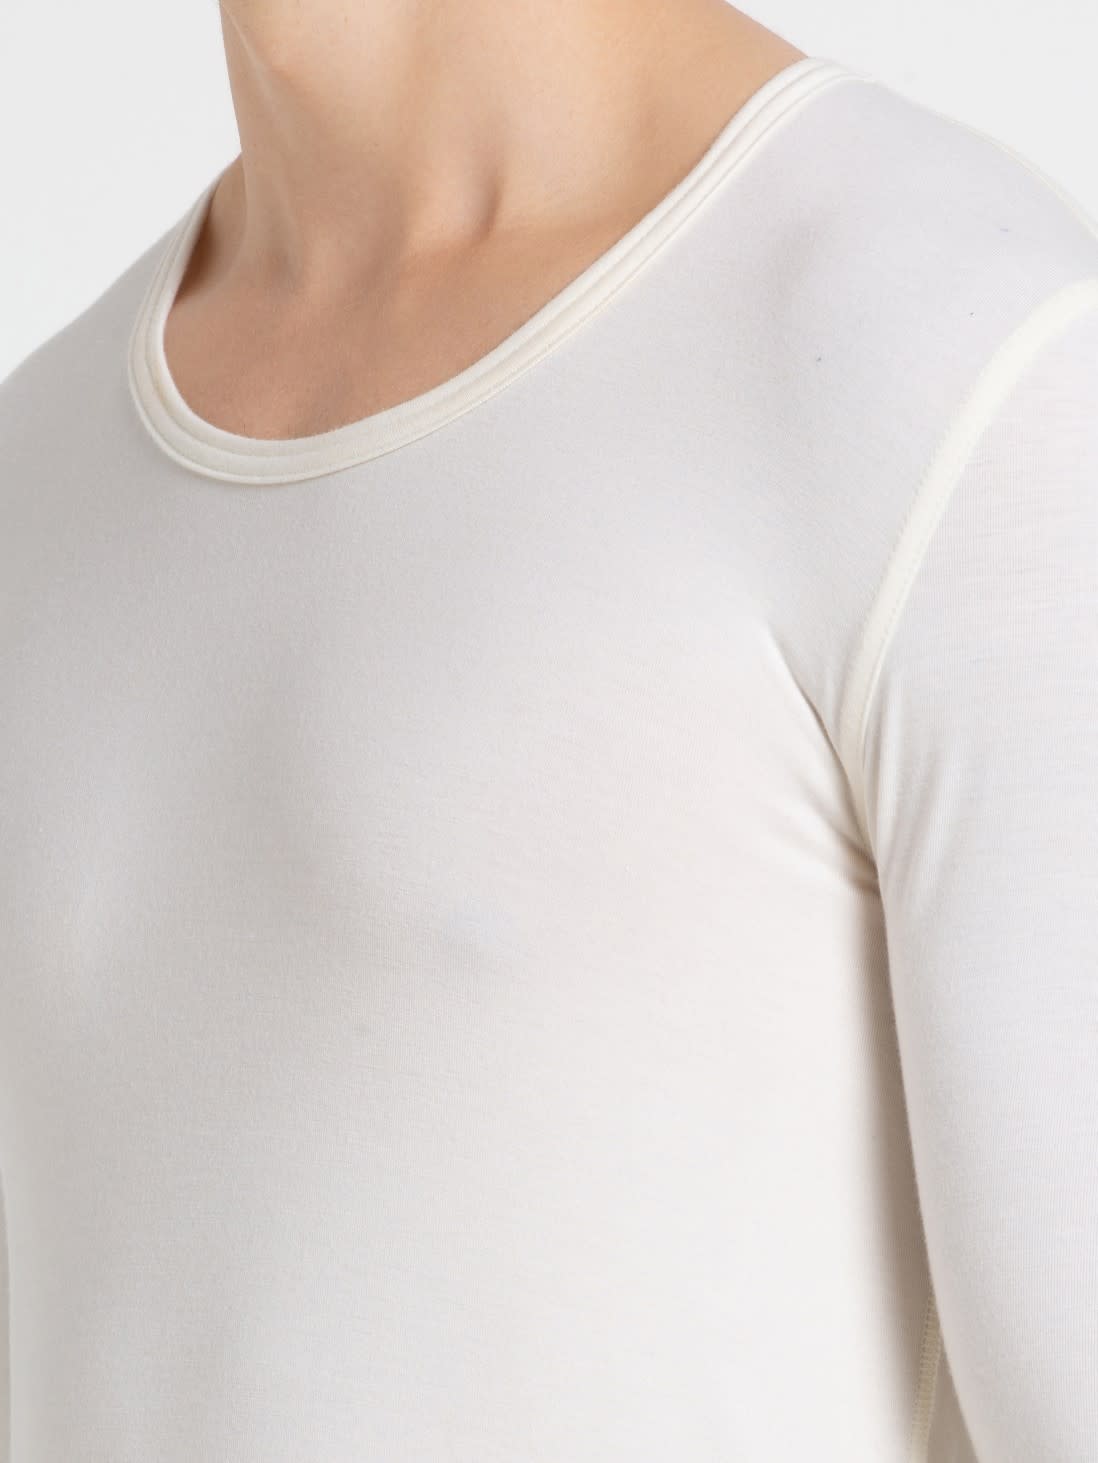 Buy Winter White Extra-soft Acrylic Fiber Thermal Long Sleeve T-Shirt for Men 2604 | Jockey India